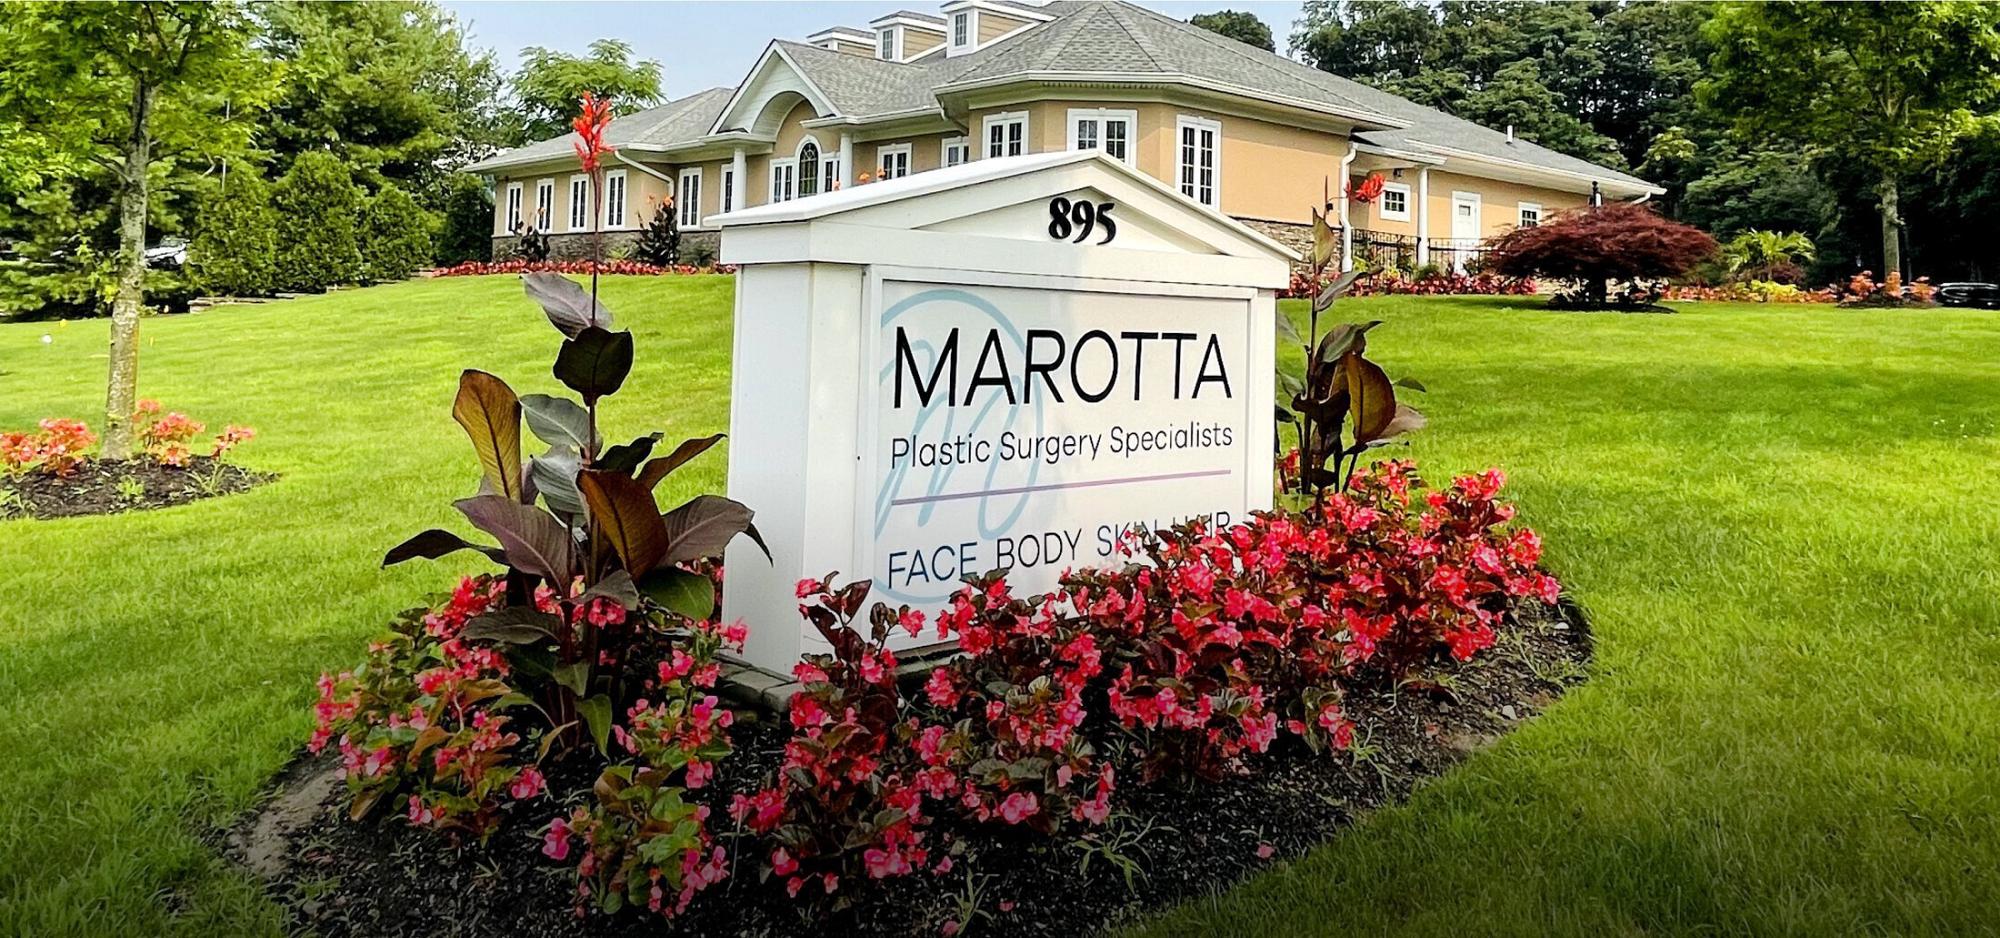 Marotta Plastic Surgery Specialists outdoor shot